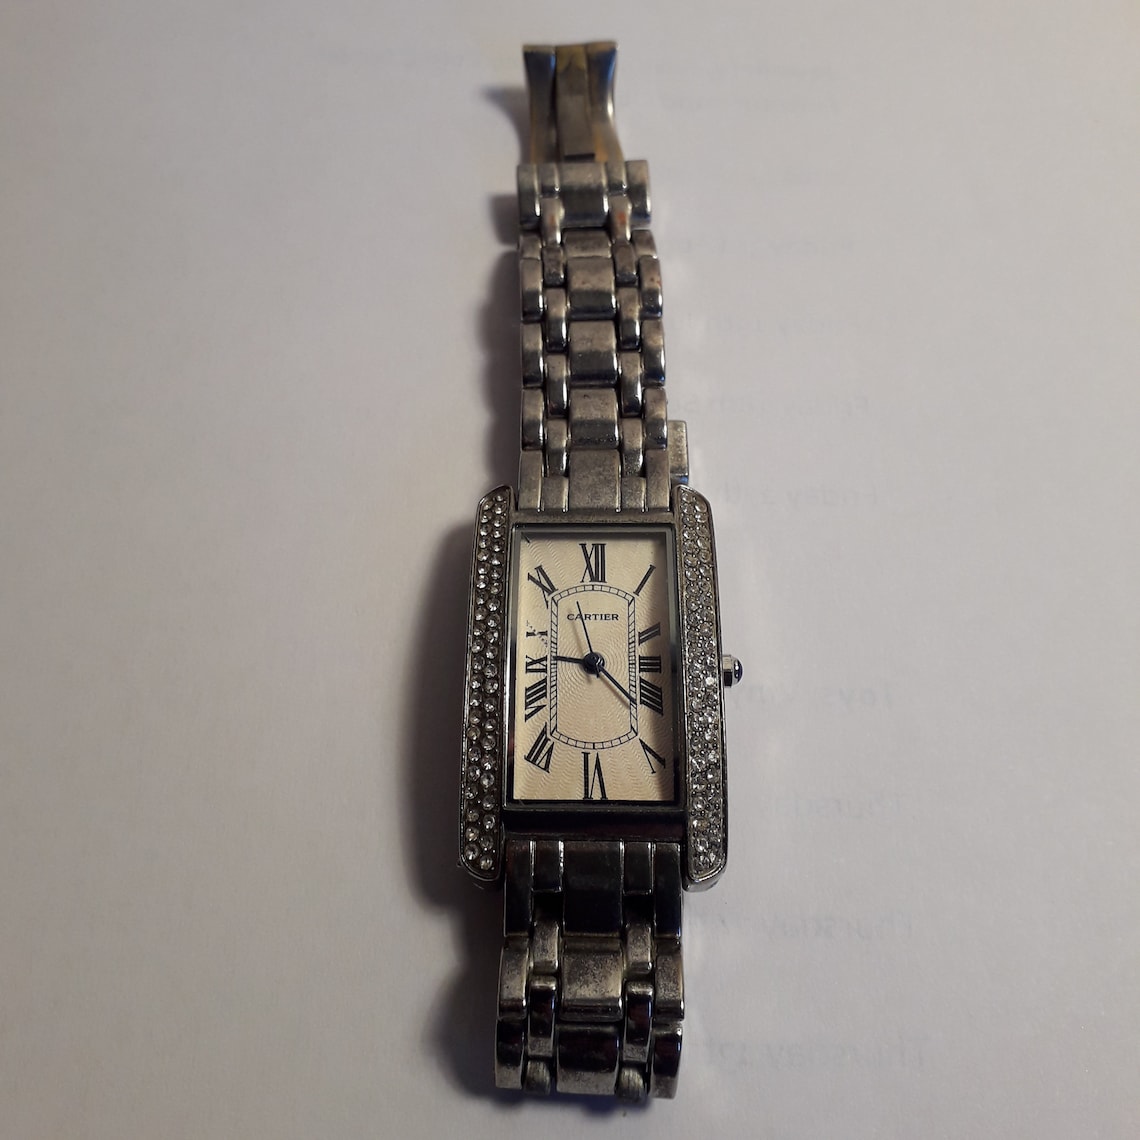 Cartier Wrist Watch LadiesParis 925 Argent Plaque Or G20m | Etsy